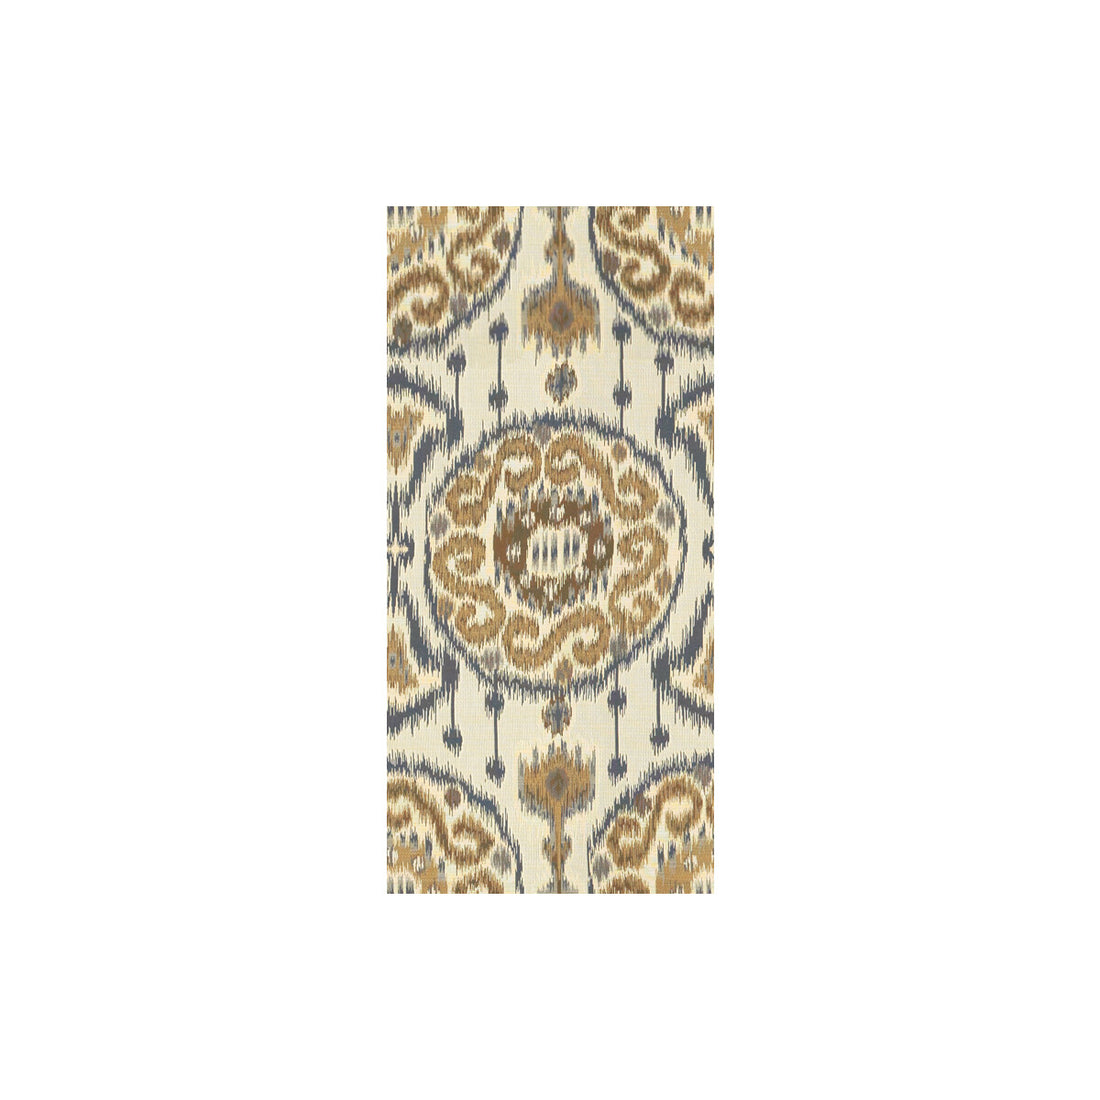 Kravet Design fabric in 31393-615 color - pattern 31393.615.0 - by Kravet Design in the Gis collection